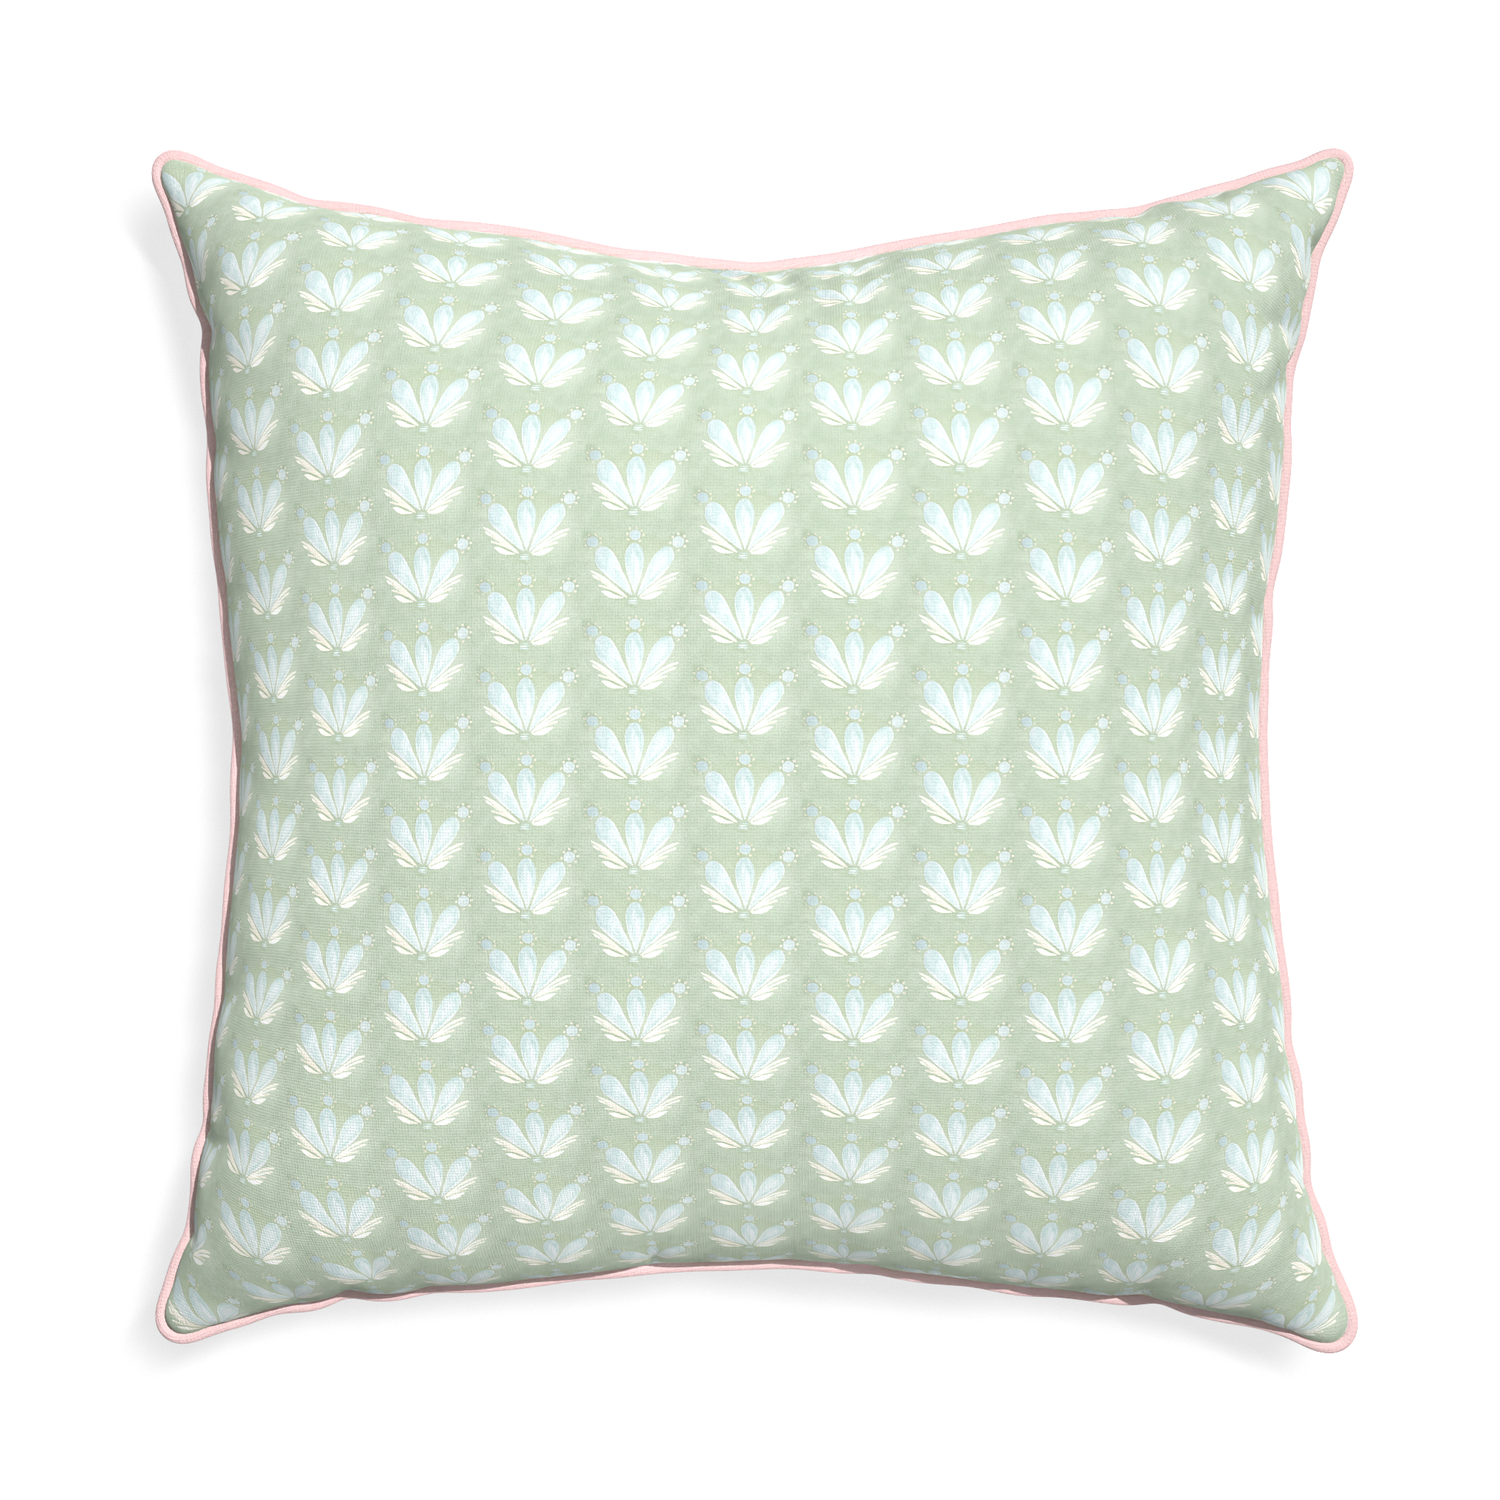 Euro-sham serena sea salt custom pillow with petal piping on white background